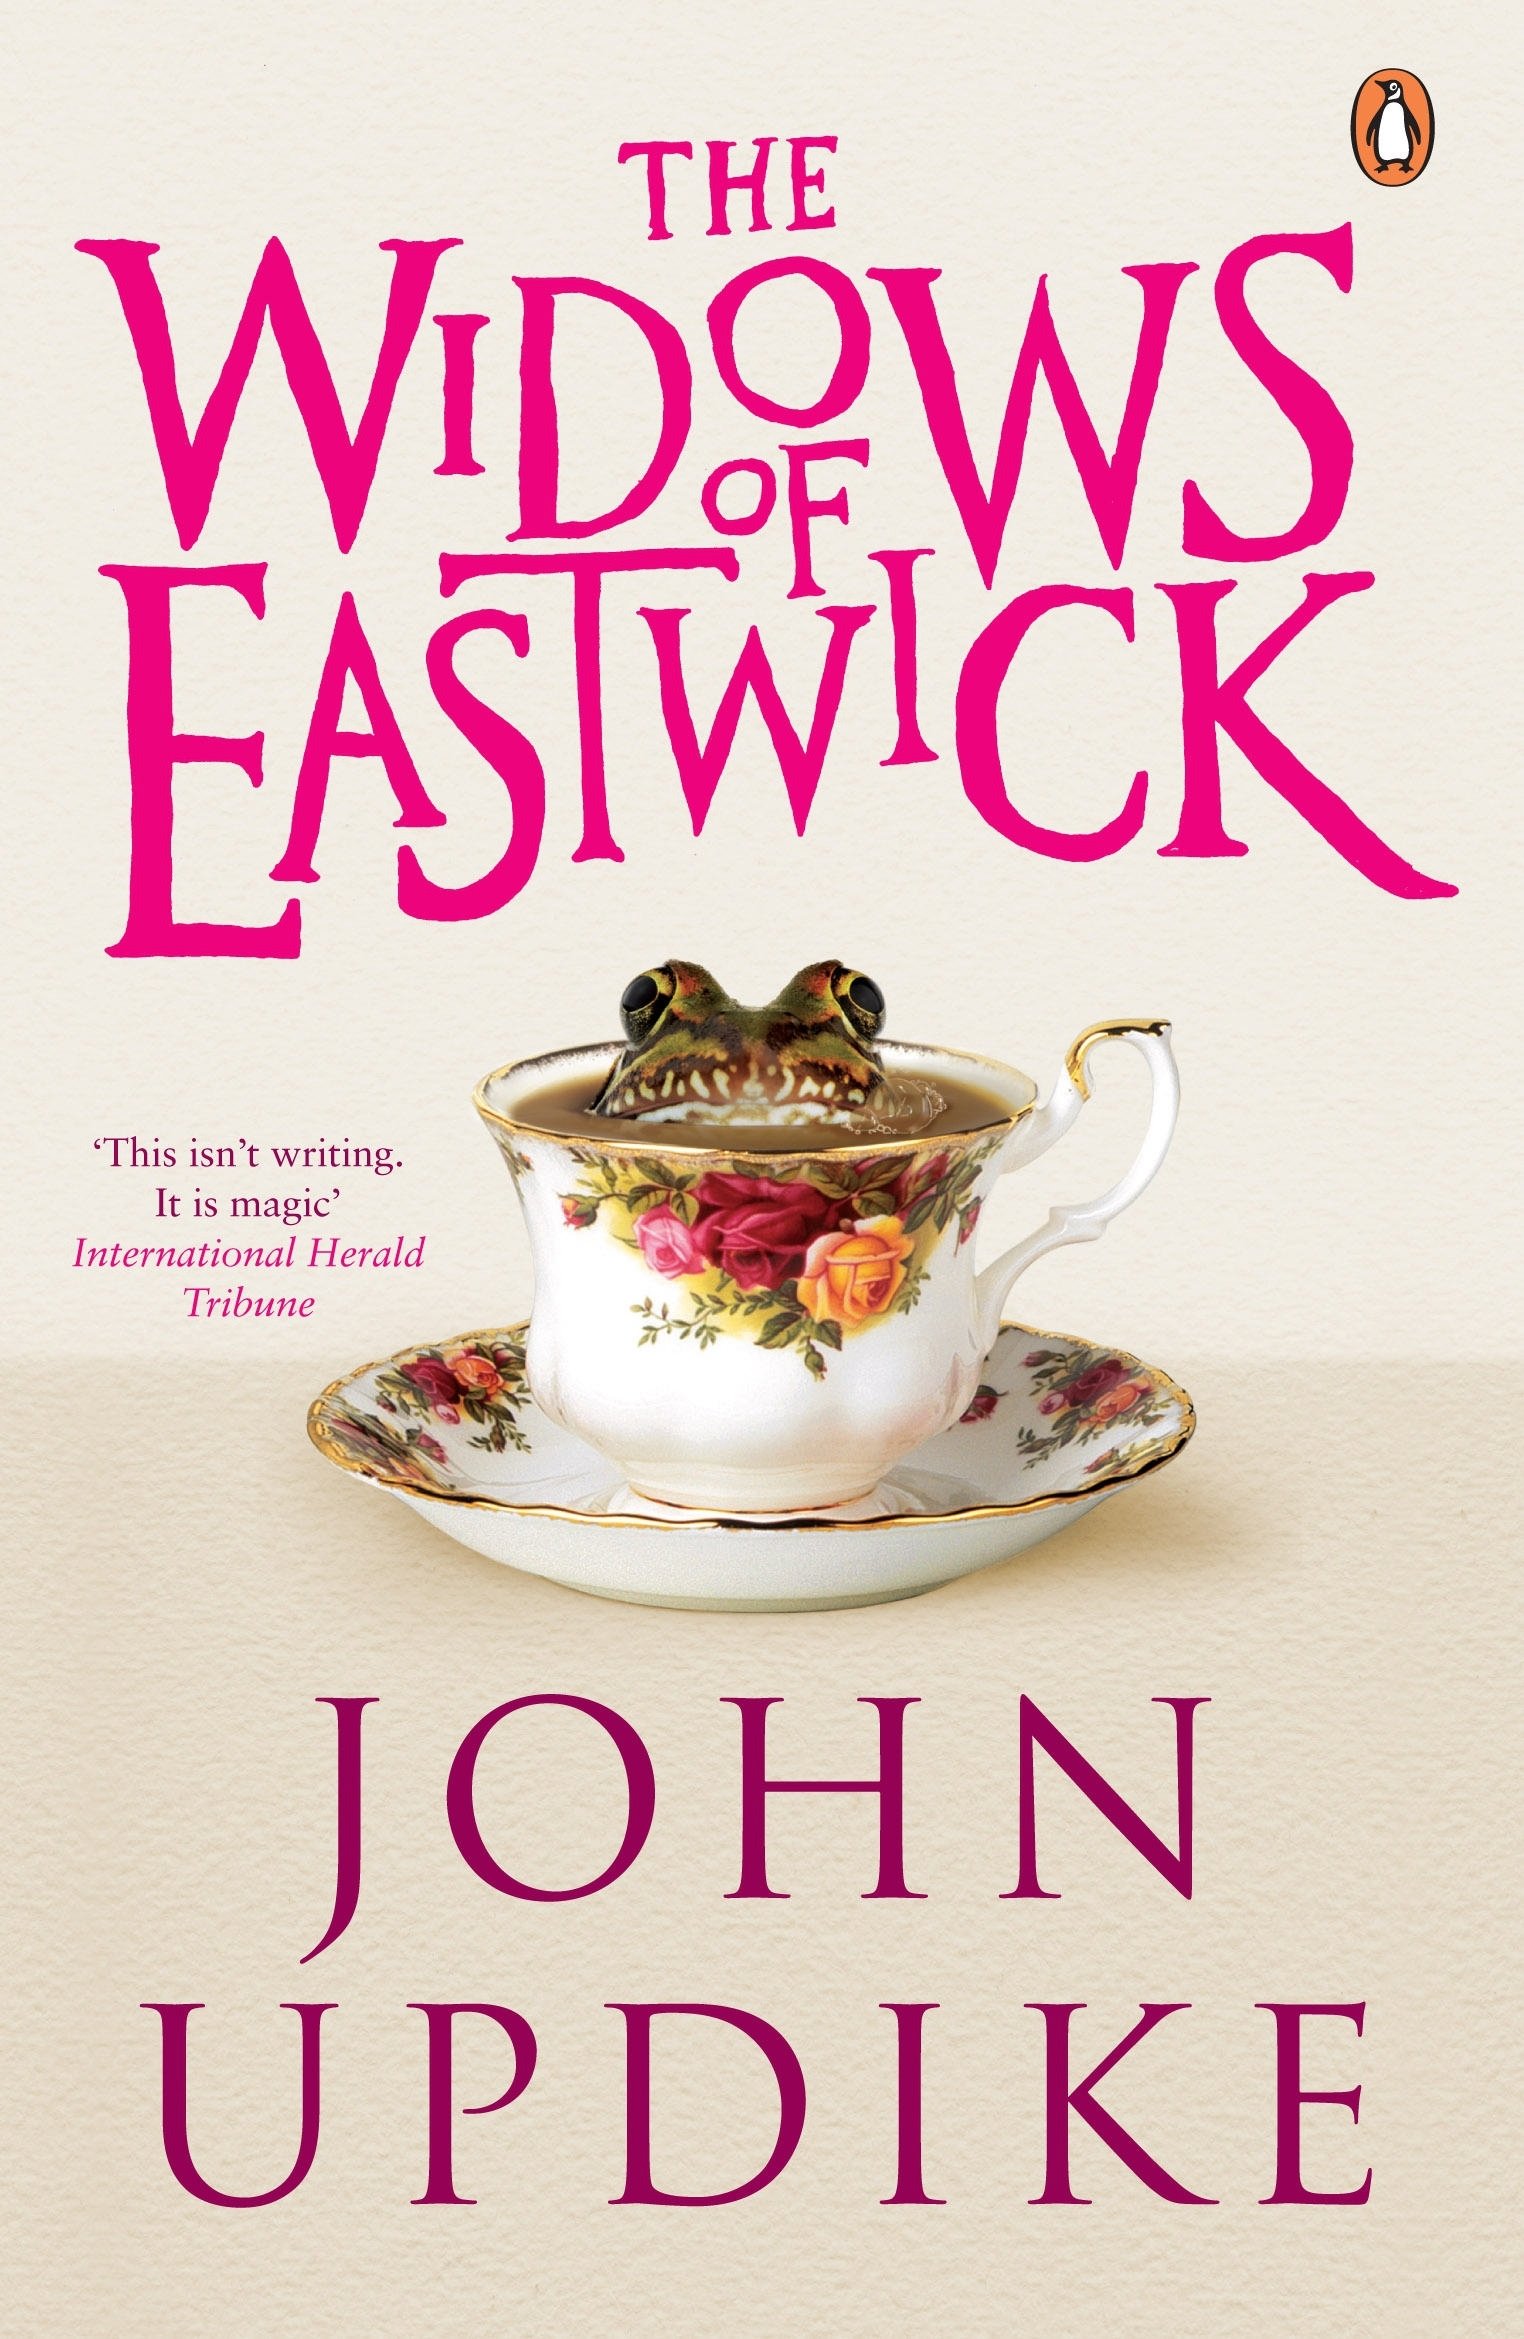 The Widows of Eastwick - listen book free online